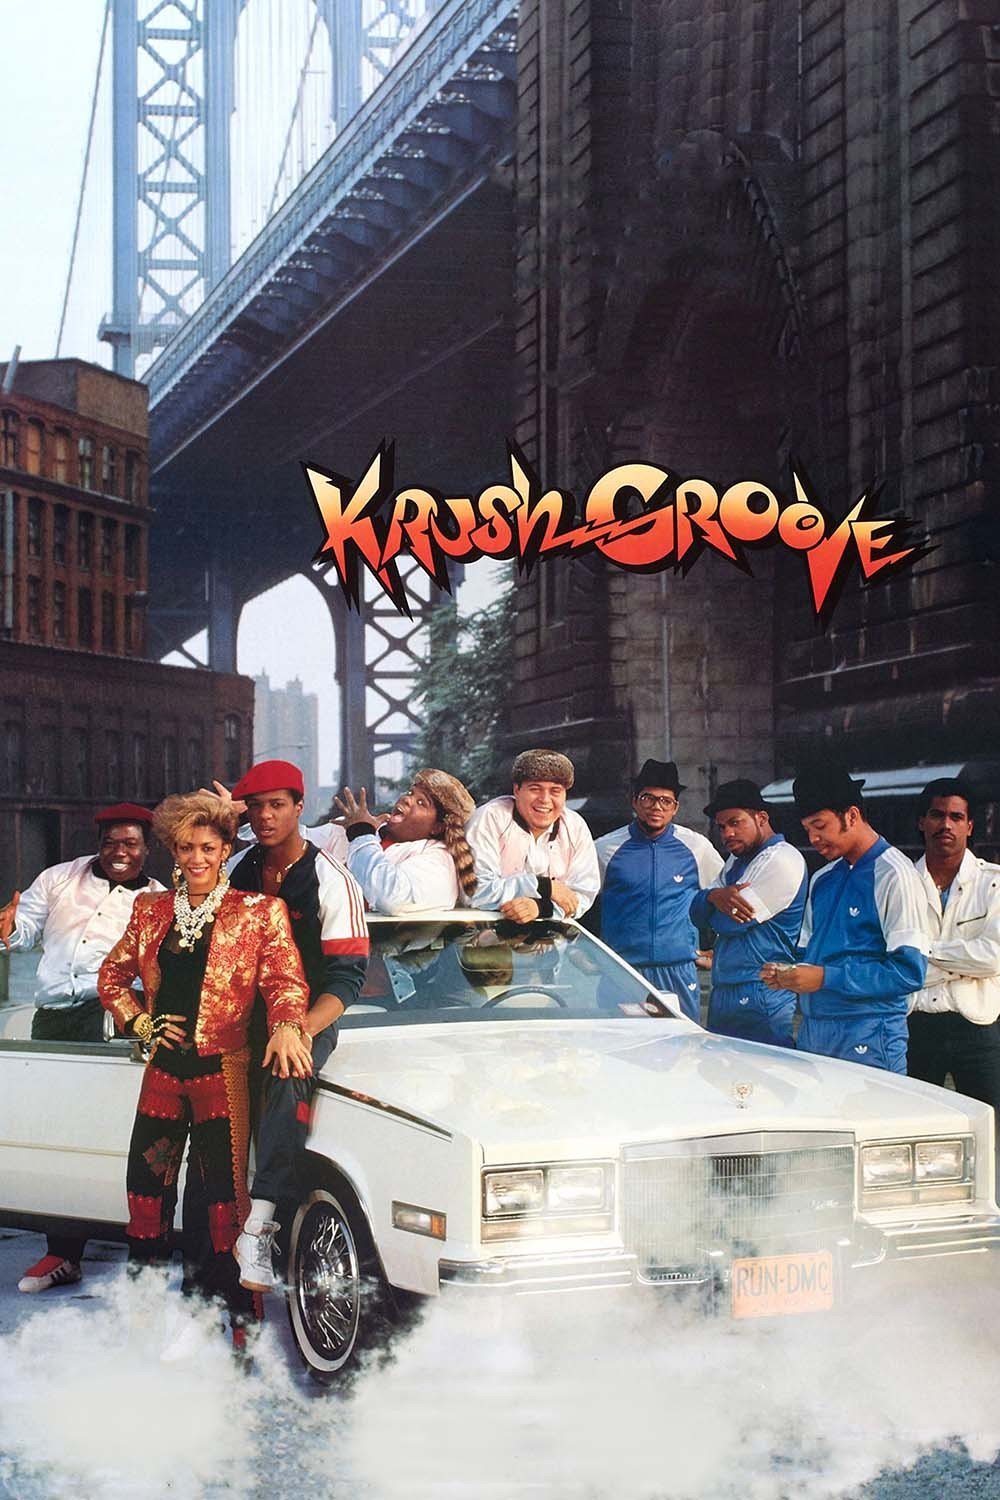 Plakat von "Krush Groove"